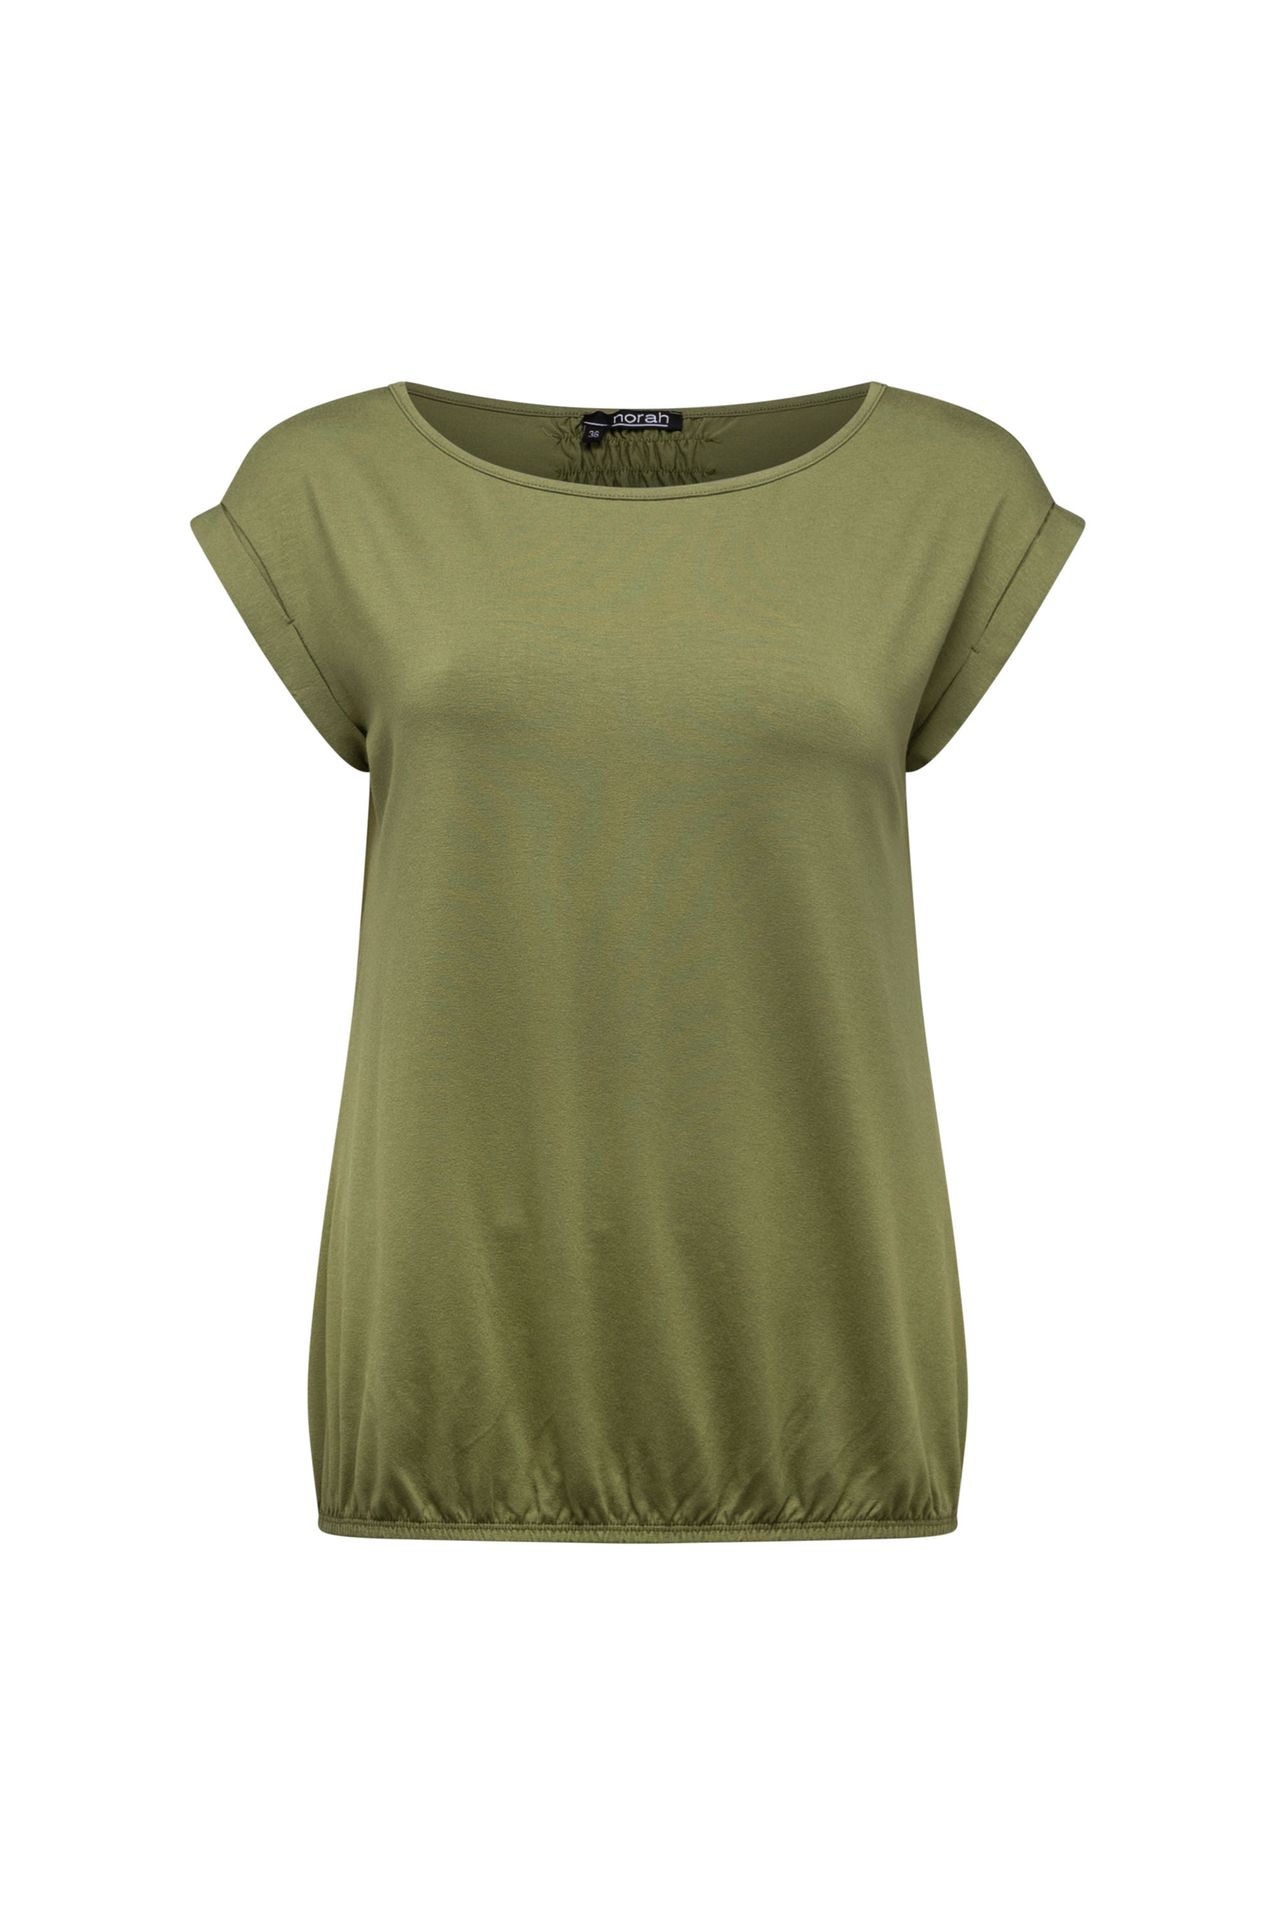 Norah Shirt Marije groen light army 203656-582